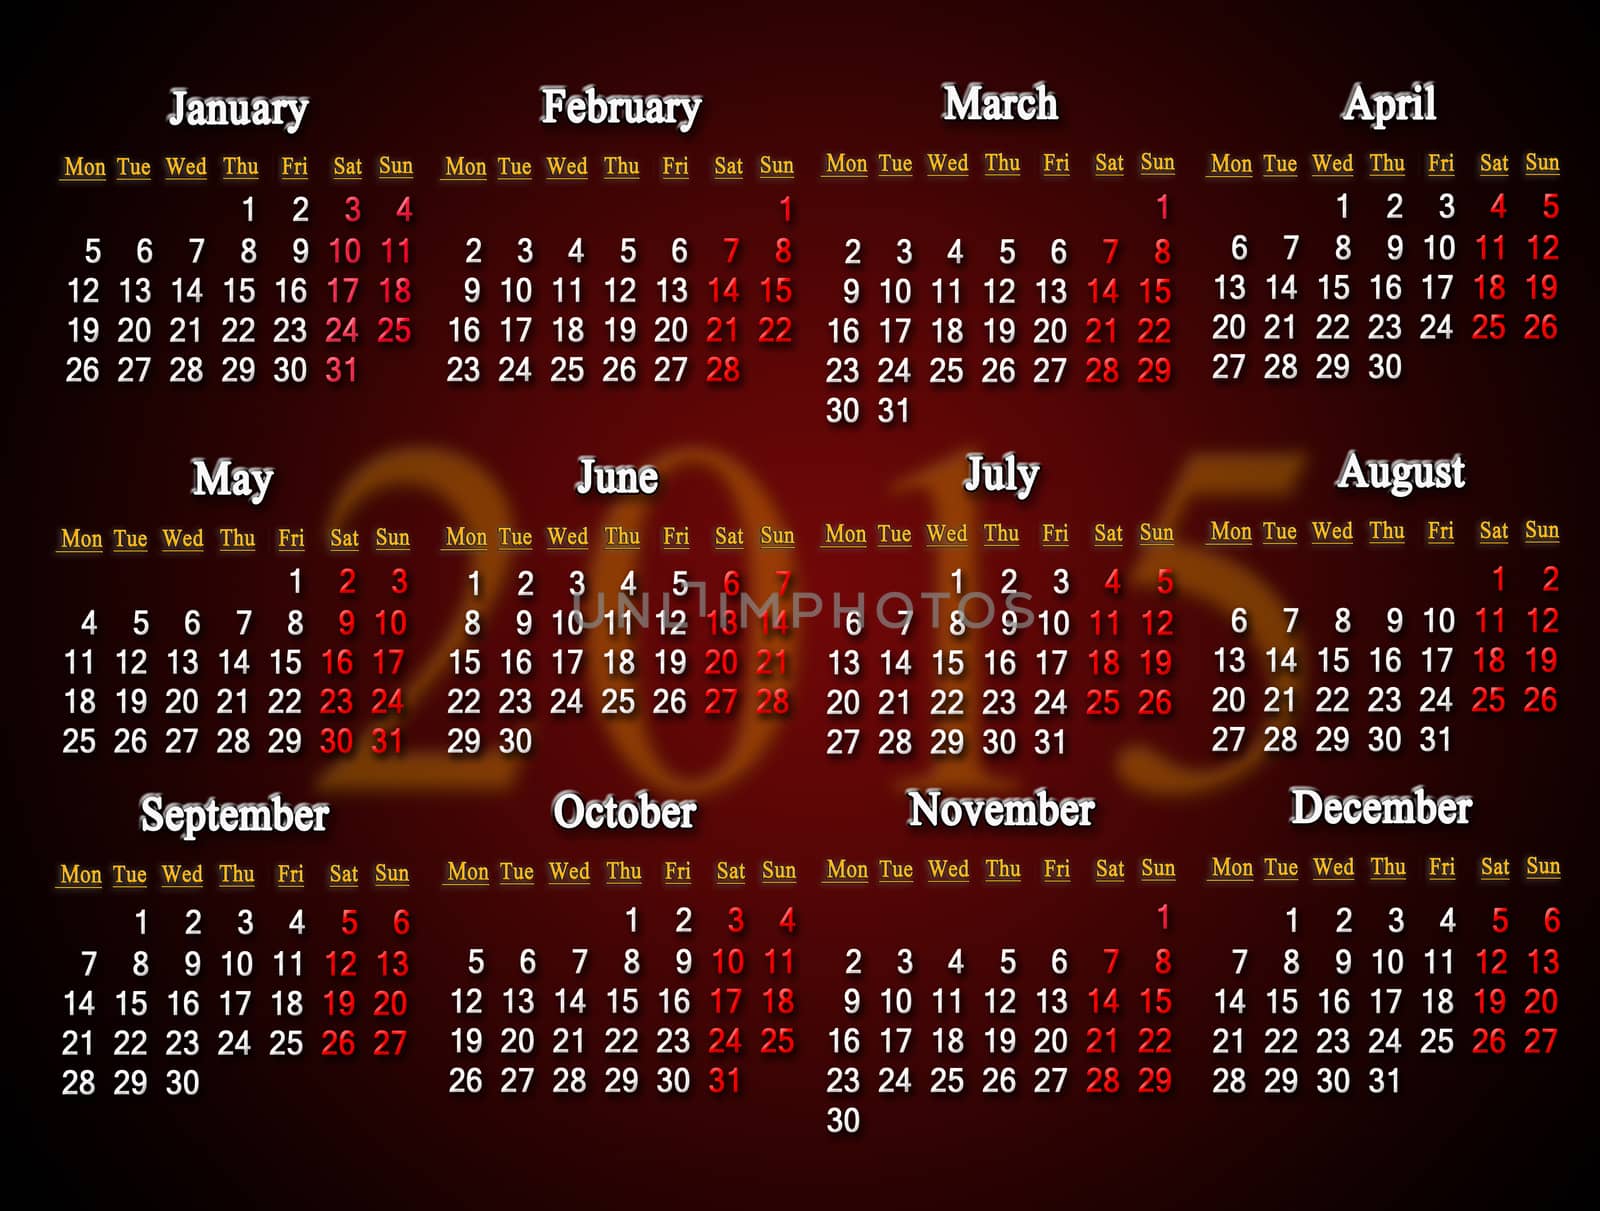 claret calendar for 2015 year by alexmak